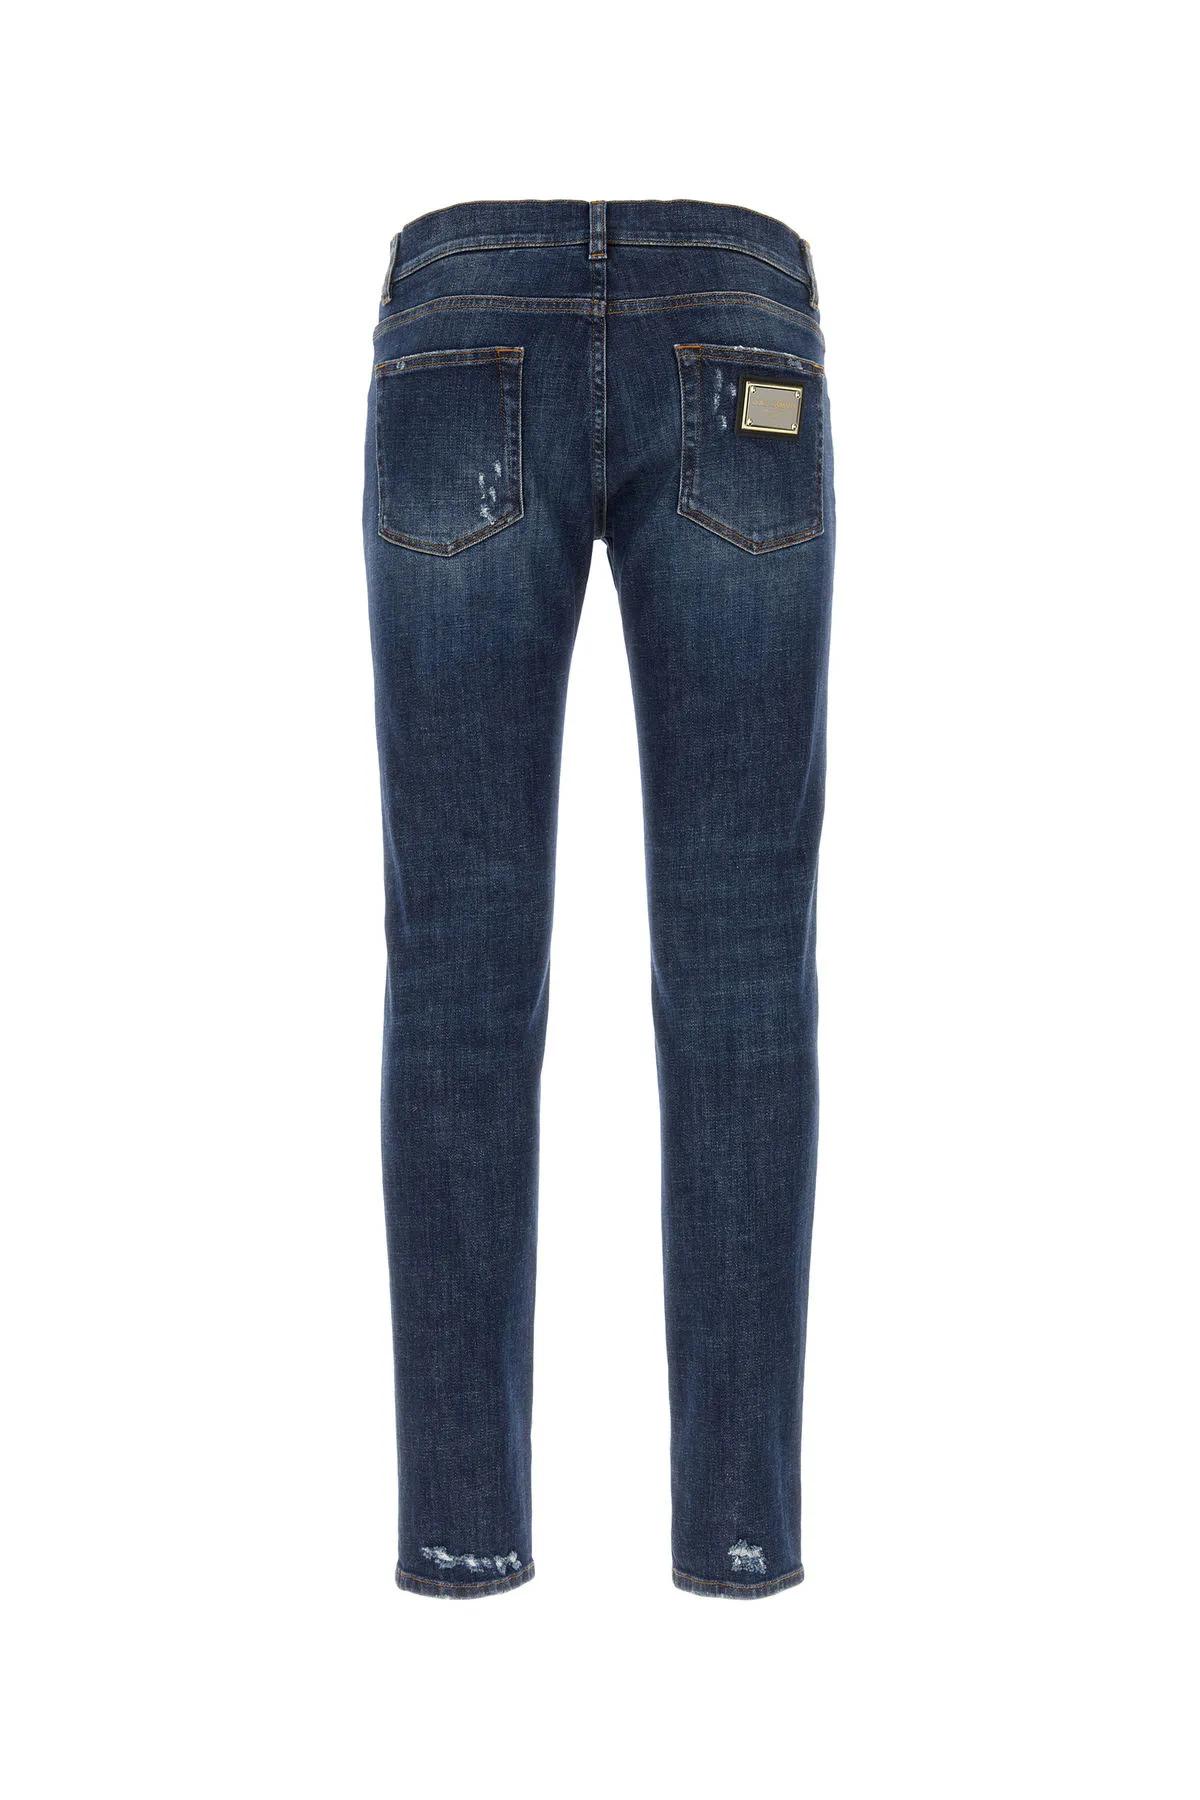 Shop Dolce & Gabbana Blue Stretch Denim Jeans